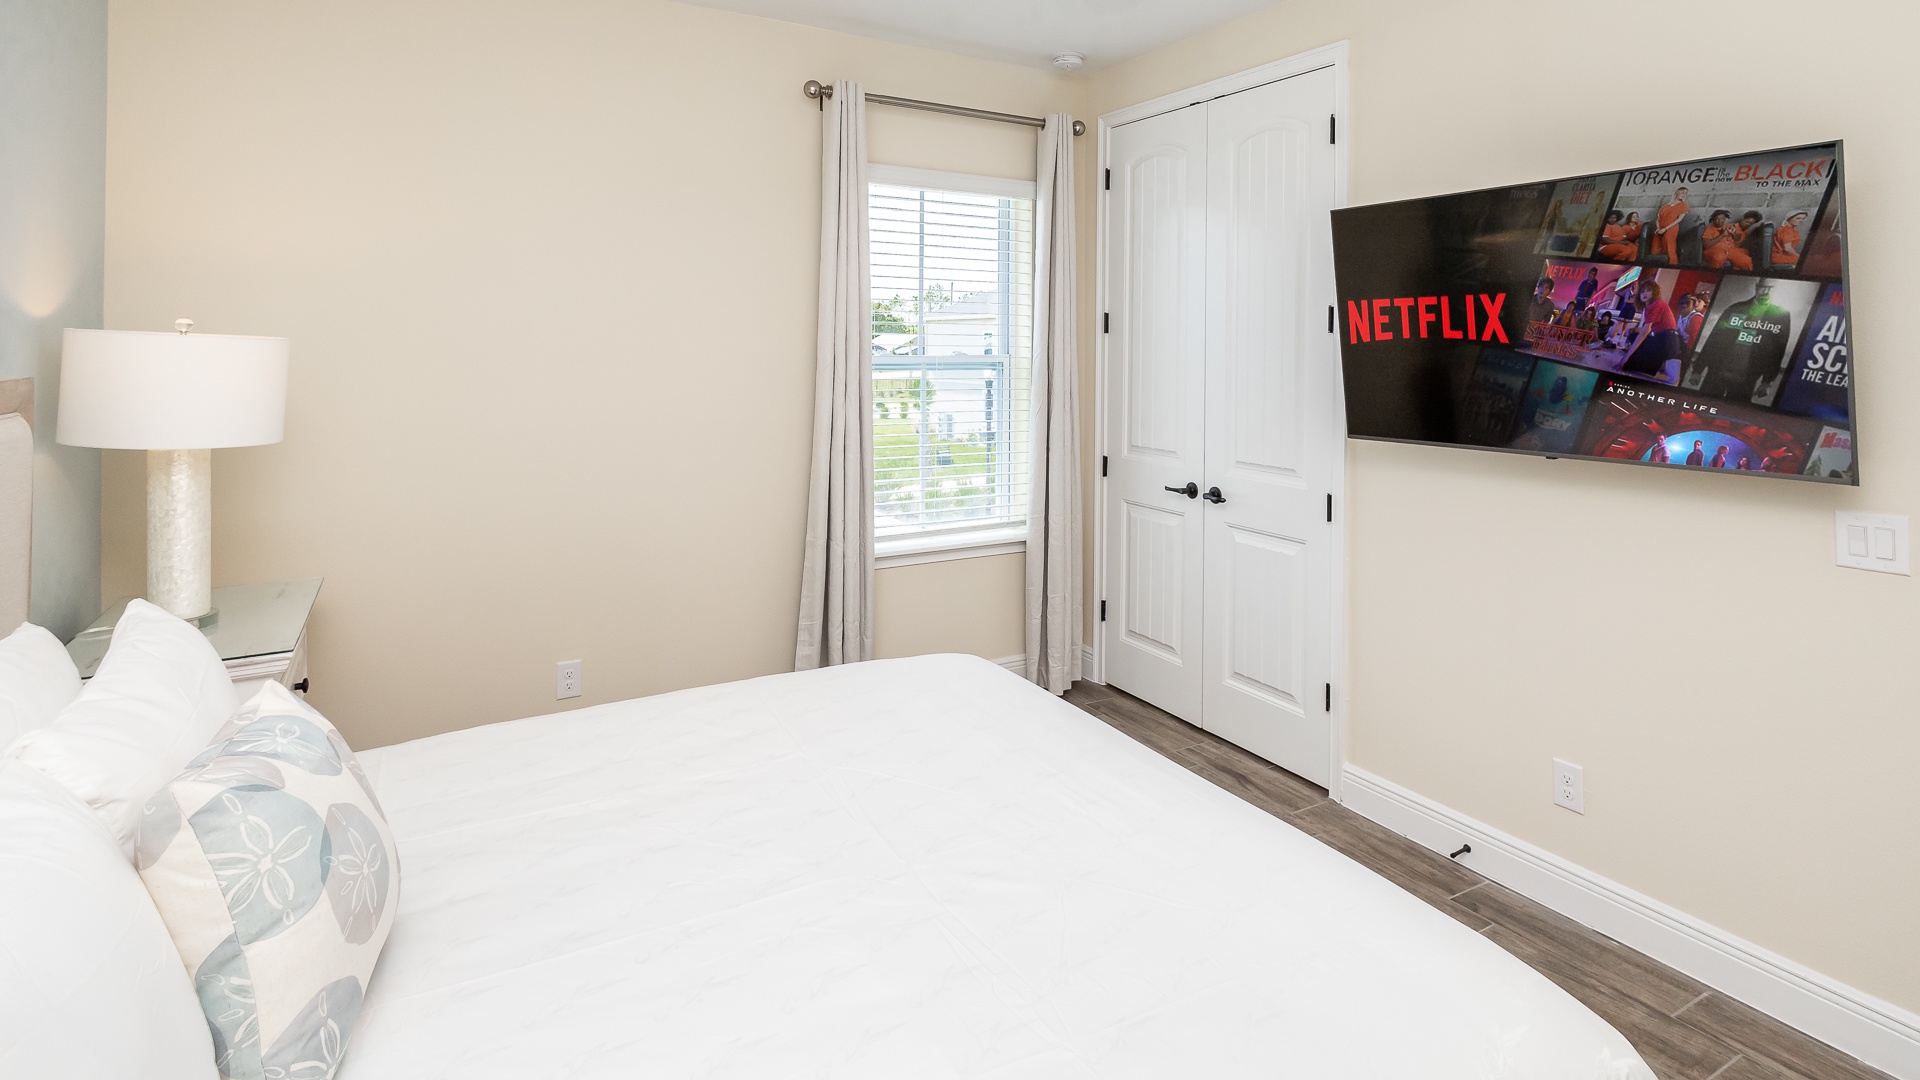 The king bedroom offers a ceiling fan, Smart TV, & plenty of space to unwind